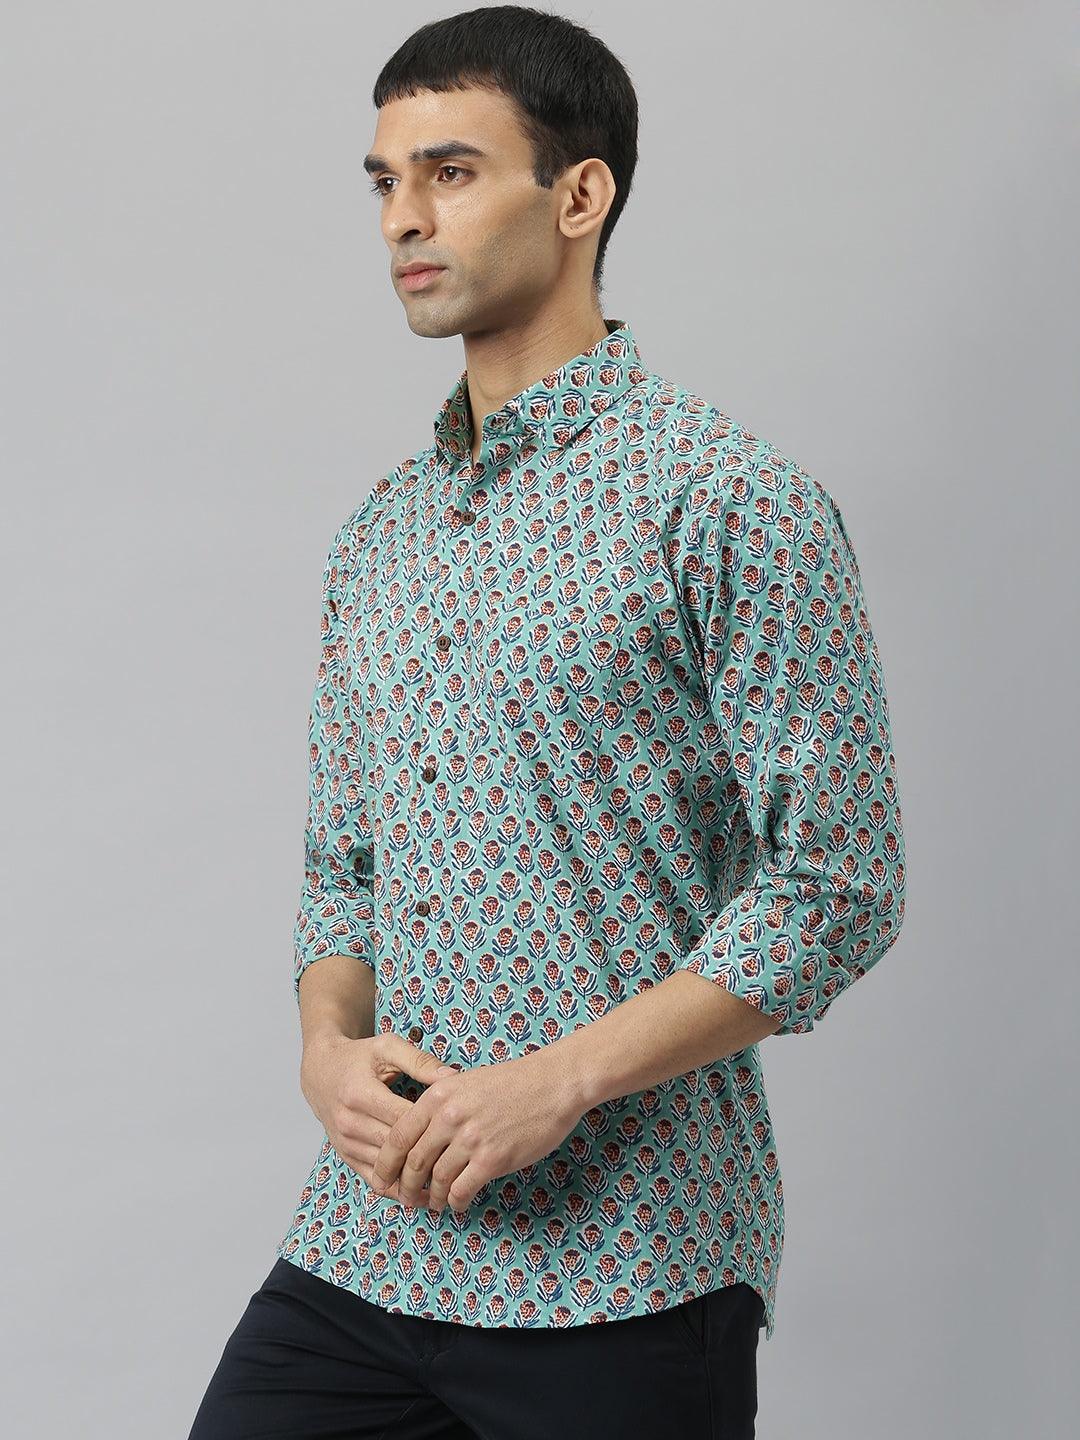 Millennial Men Sea Green & Blue  Cotton  Full Sleeve  Shirt for Men-MMF0280 - divenaworld.com